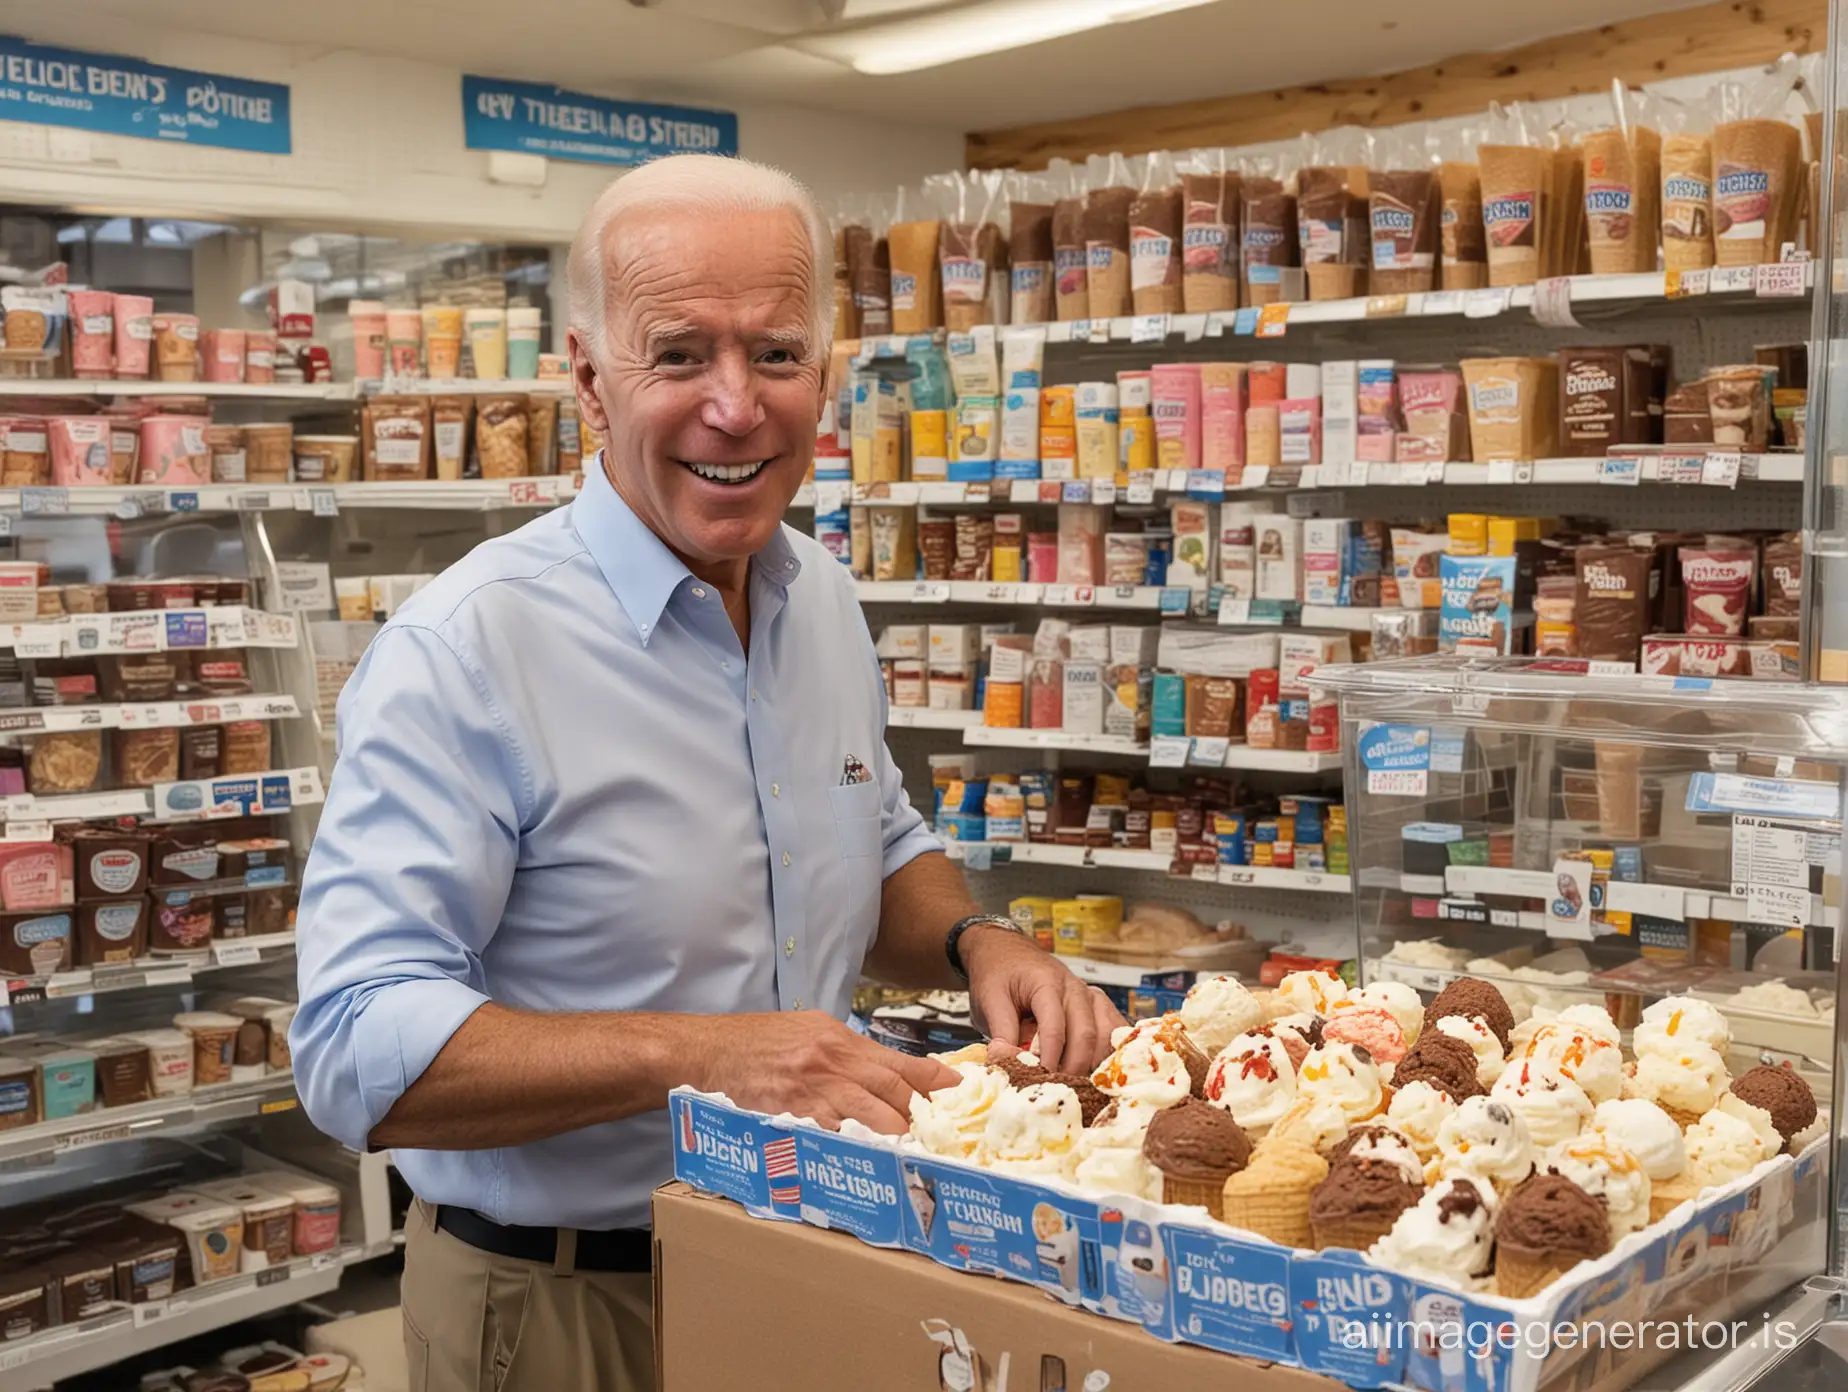 Joe-Biden-Selling-Ice-Cream-in-a-Charming-Shop